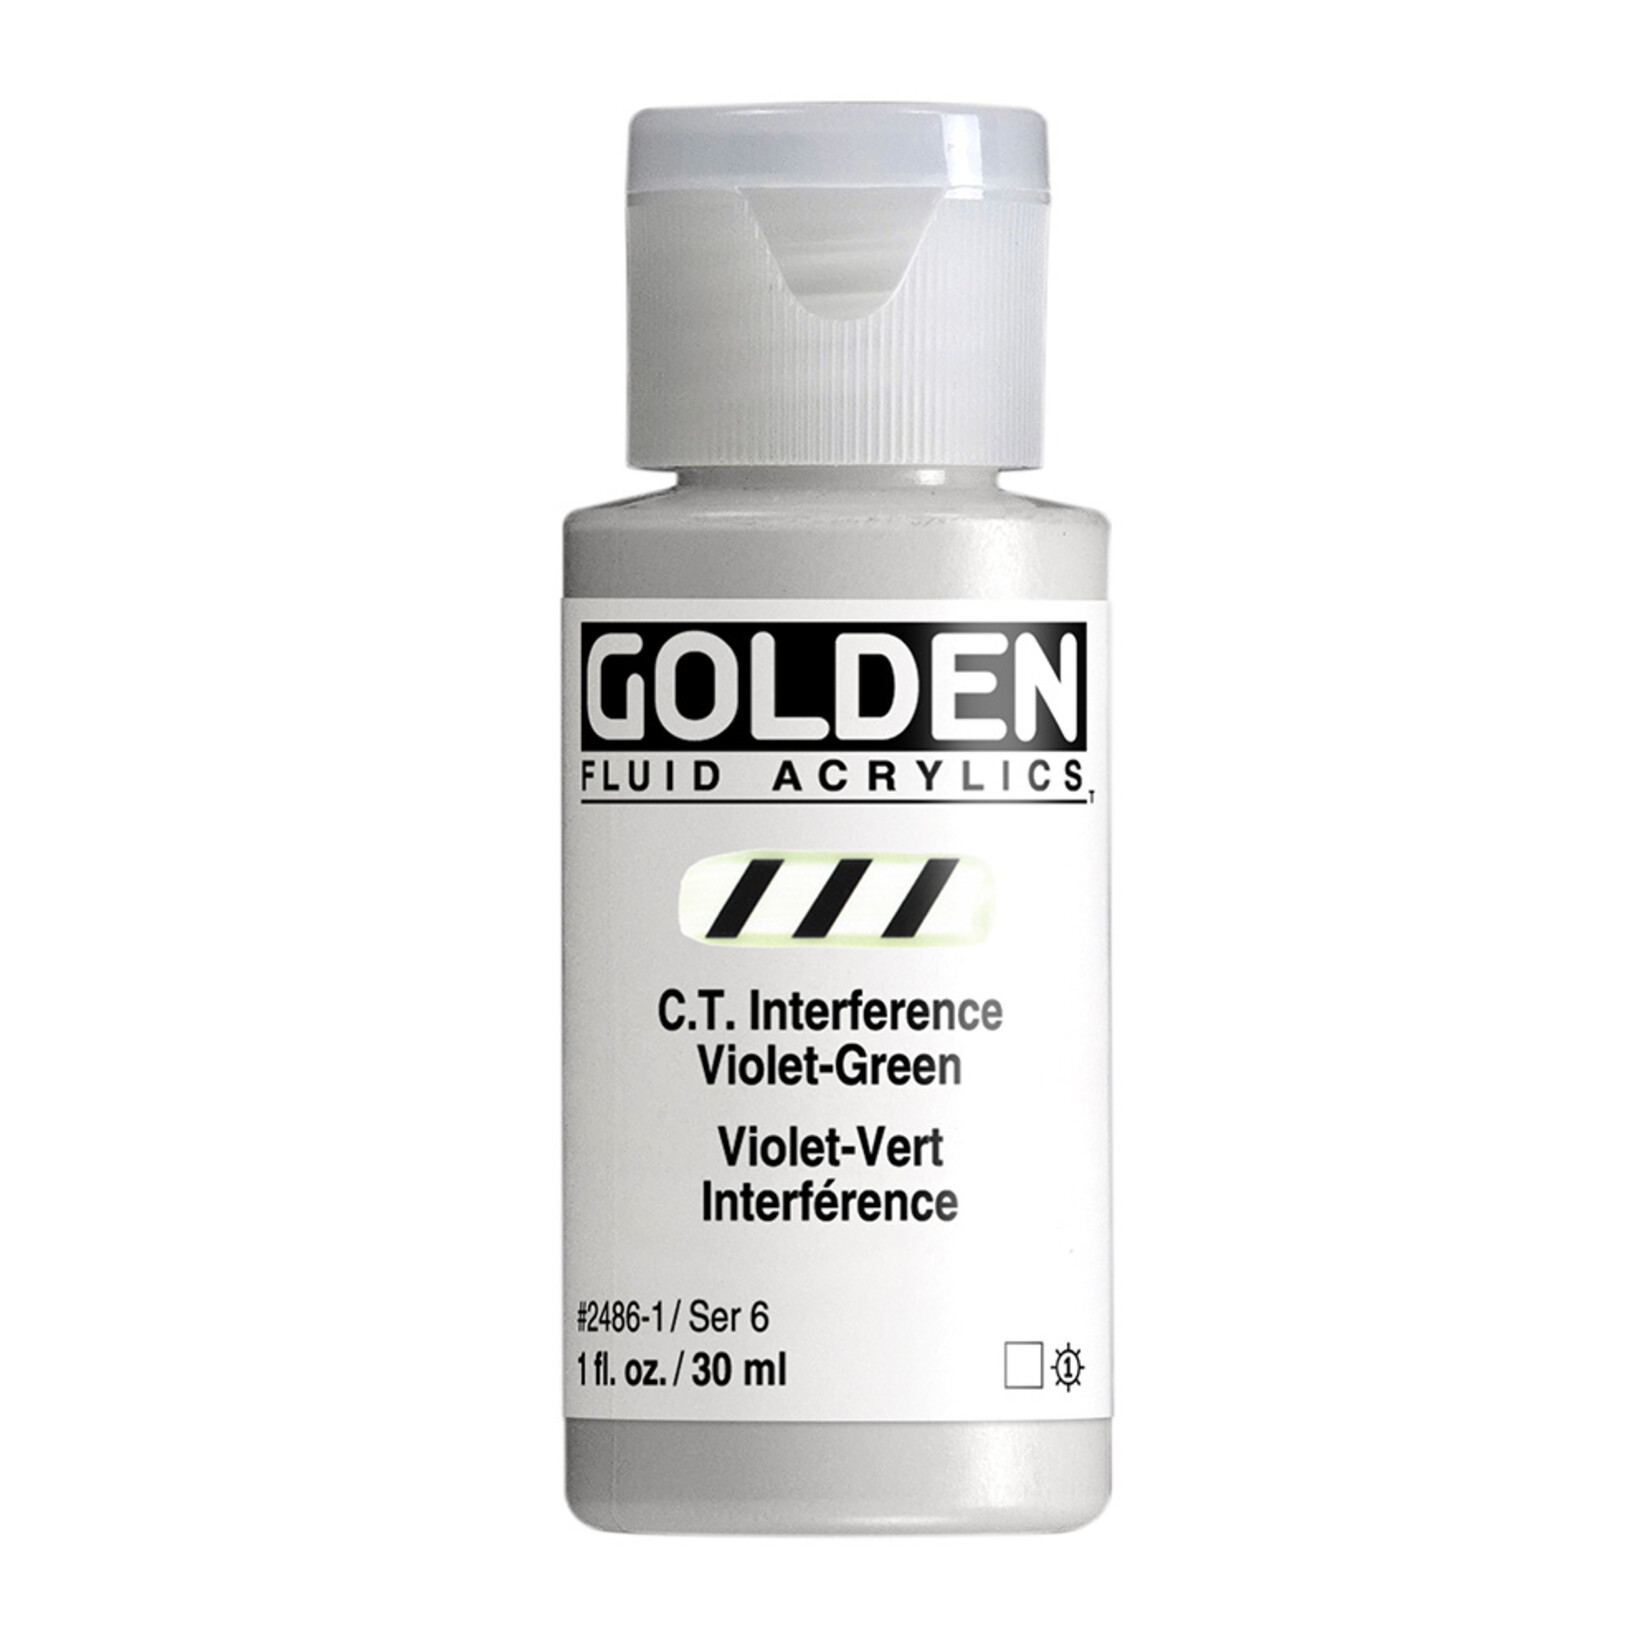 GOLDEN GOLDEN FLUID ACRYLIC 1OZ INTERFERENCE C.T. VIOLET-GREEN